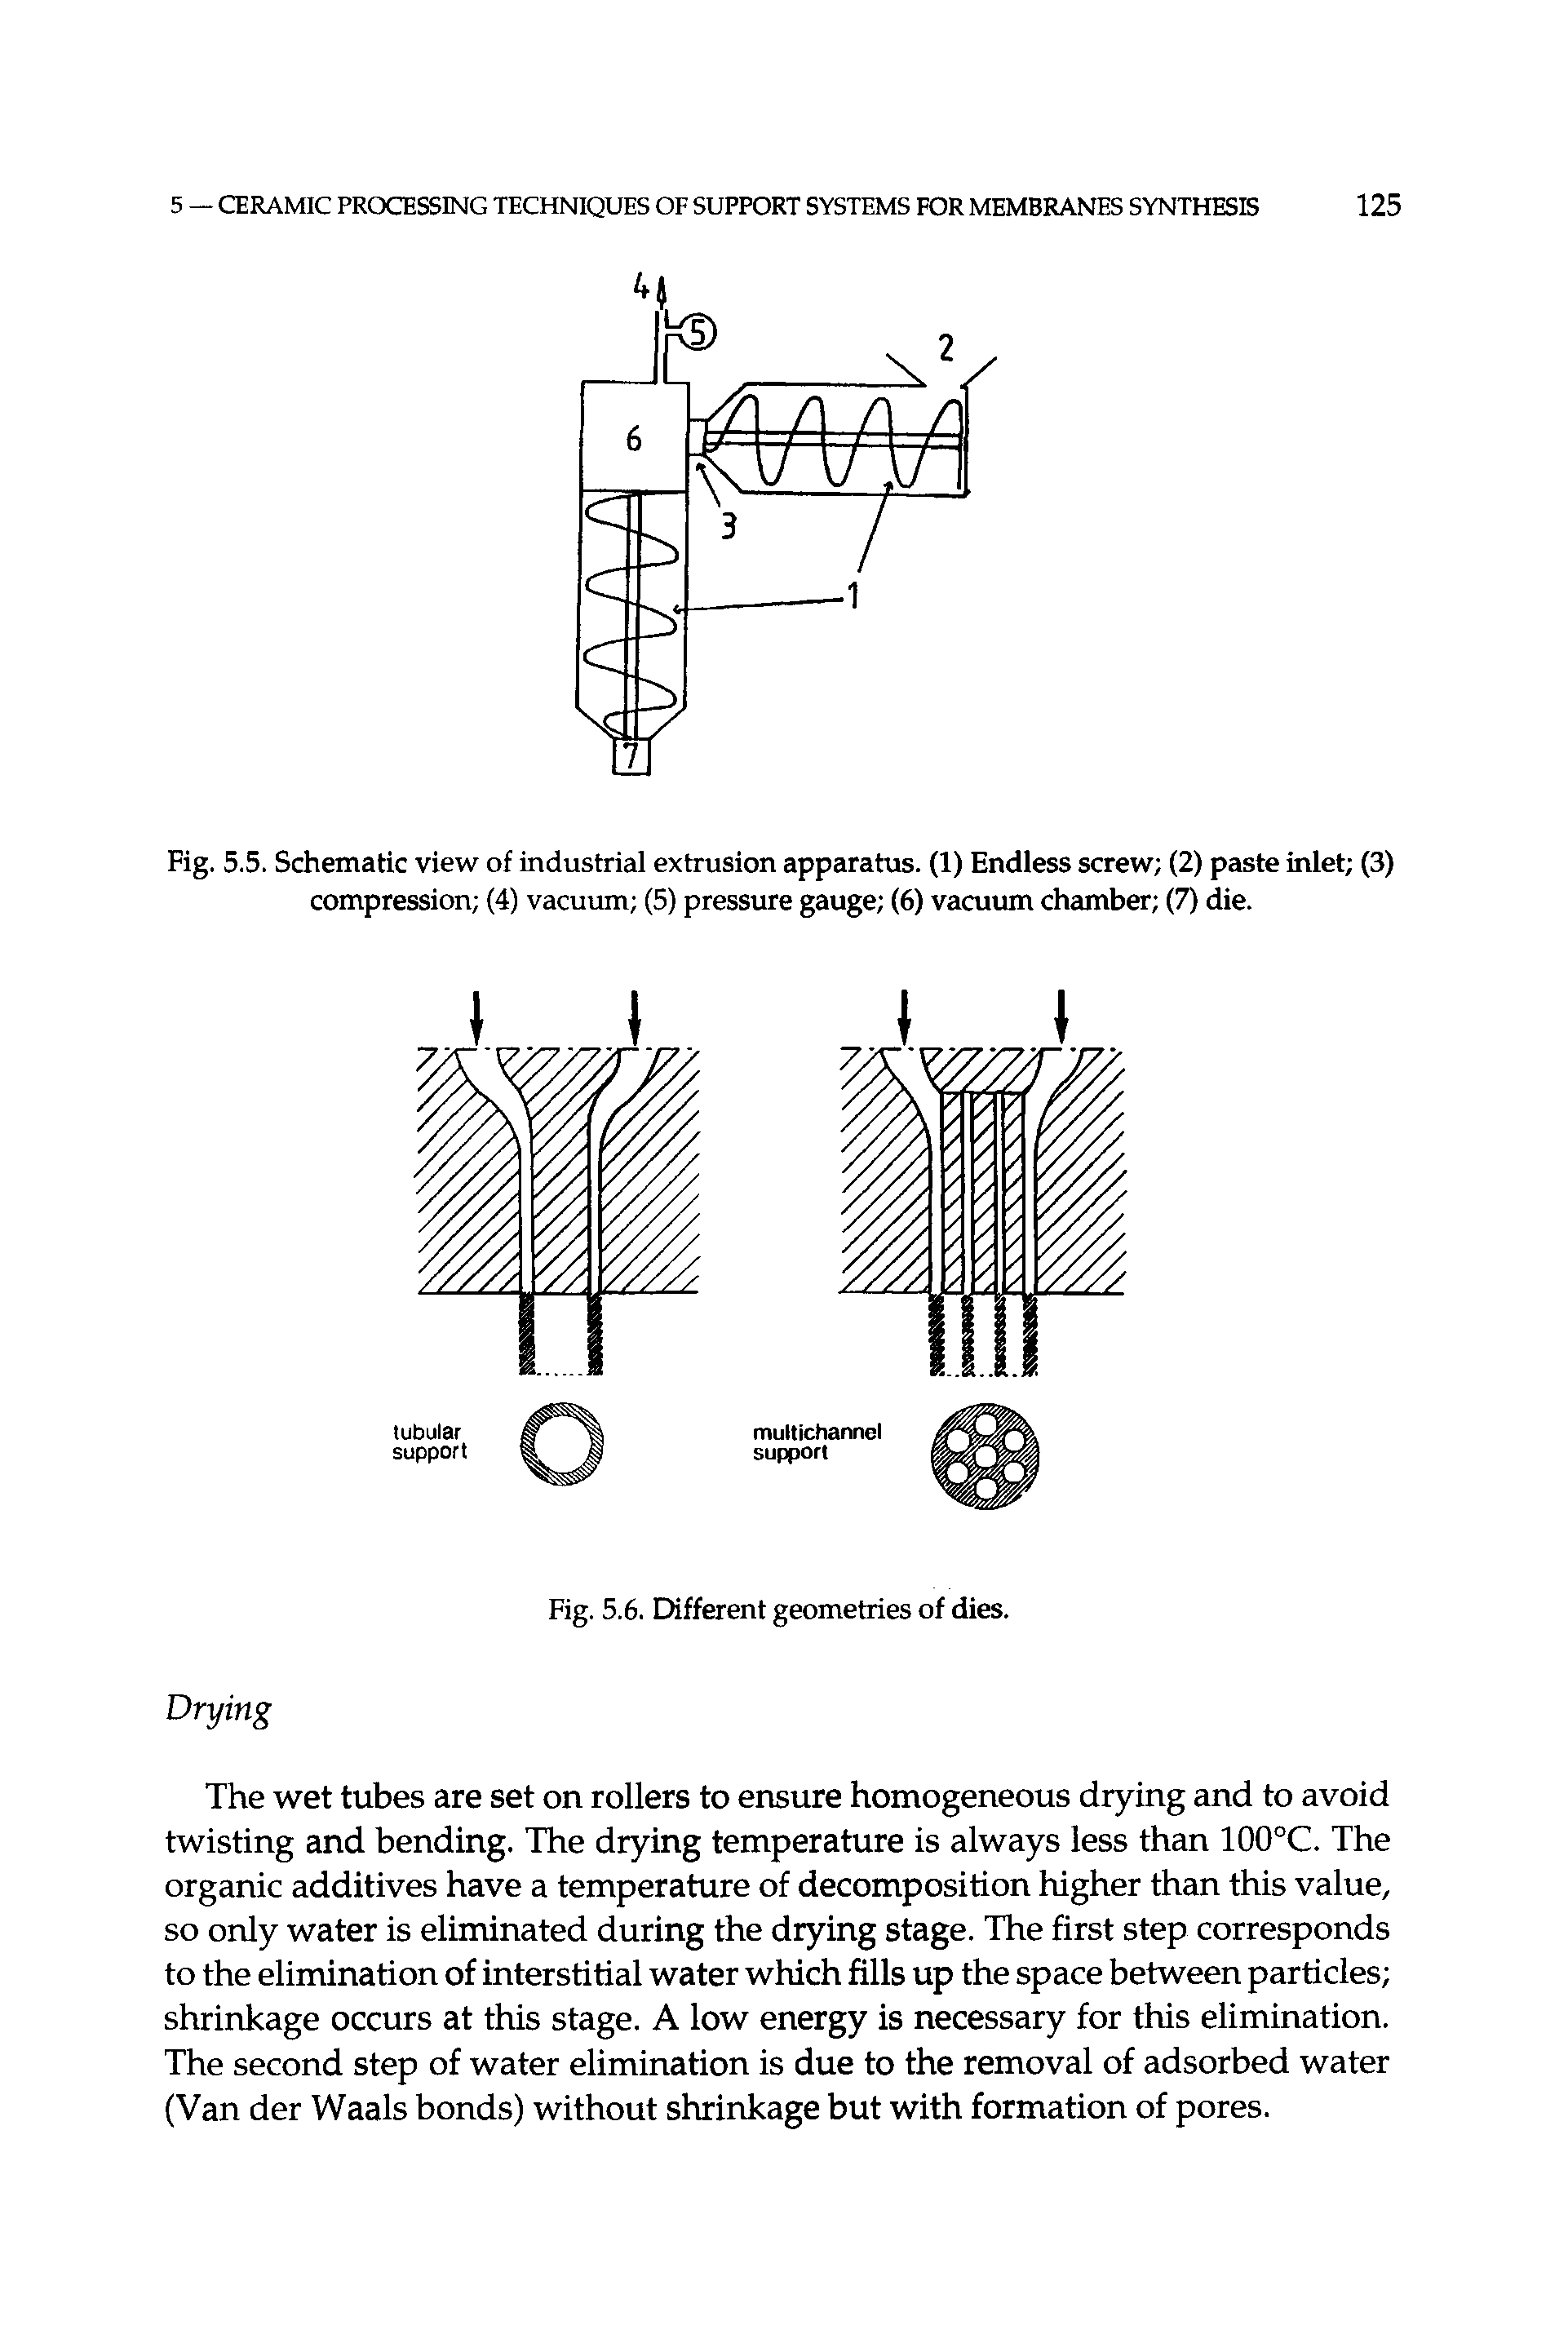 Fig. 5.5. Schematic view of industrial extrusion apparatus. (1) Endless screw (2) paste inlet (3) compression (4) vacuum (5) pressure gauge (6) vacuum cheunber (7) die.